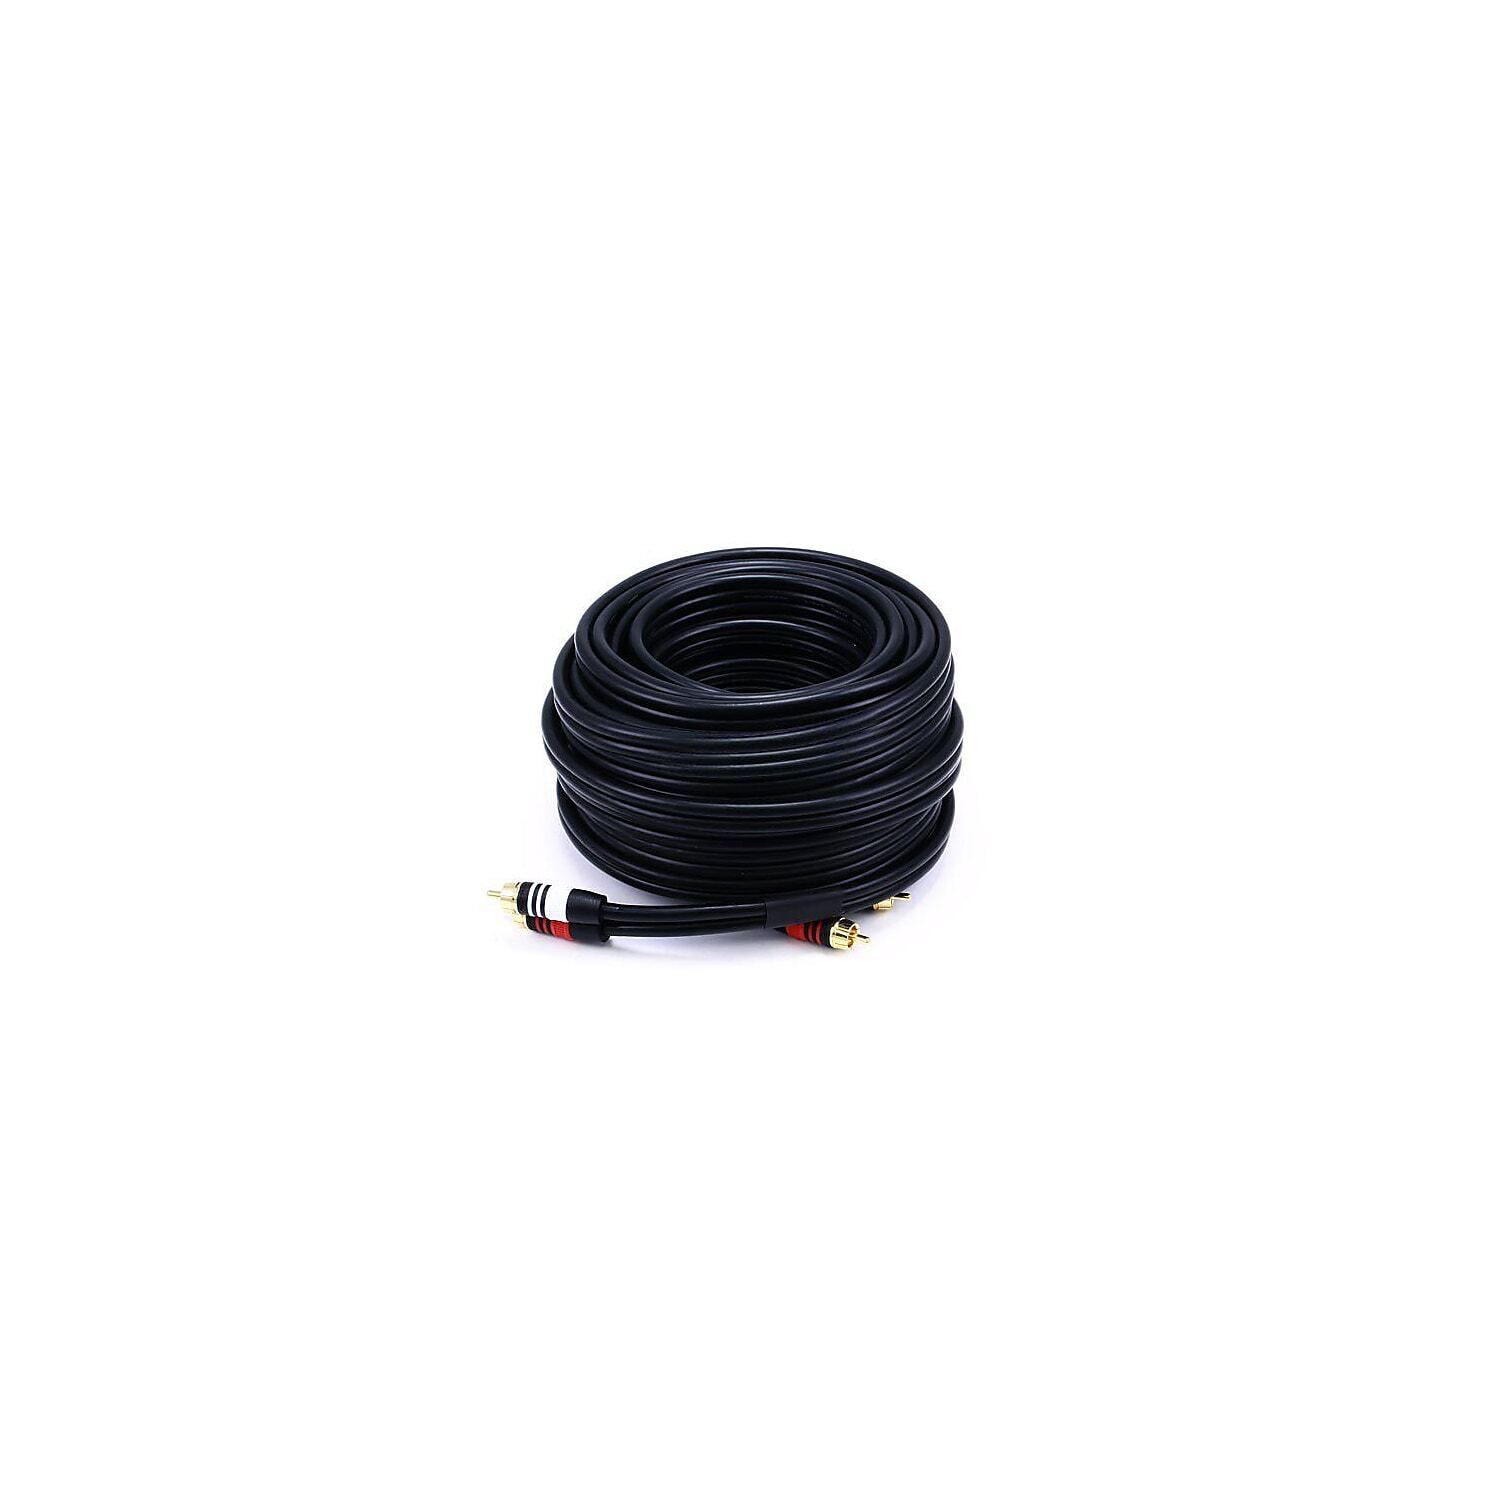 Monoprice Premium 2868 50' RCA Cable Black 102868